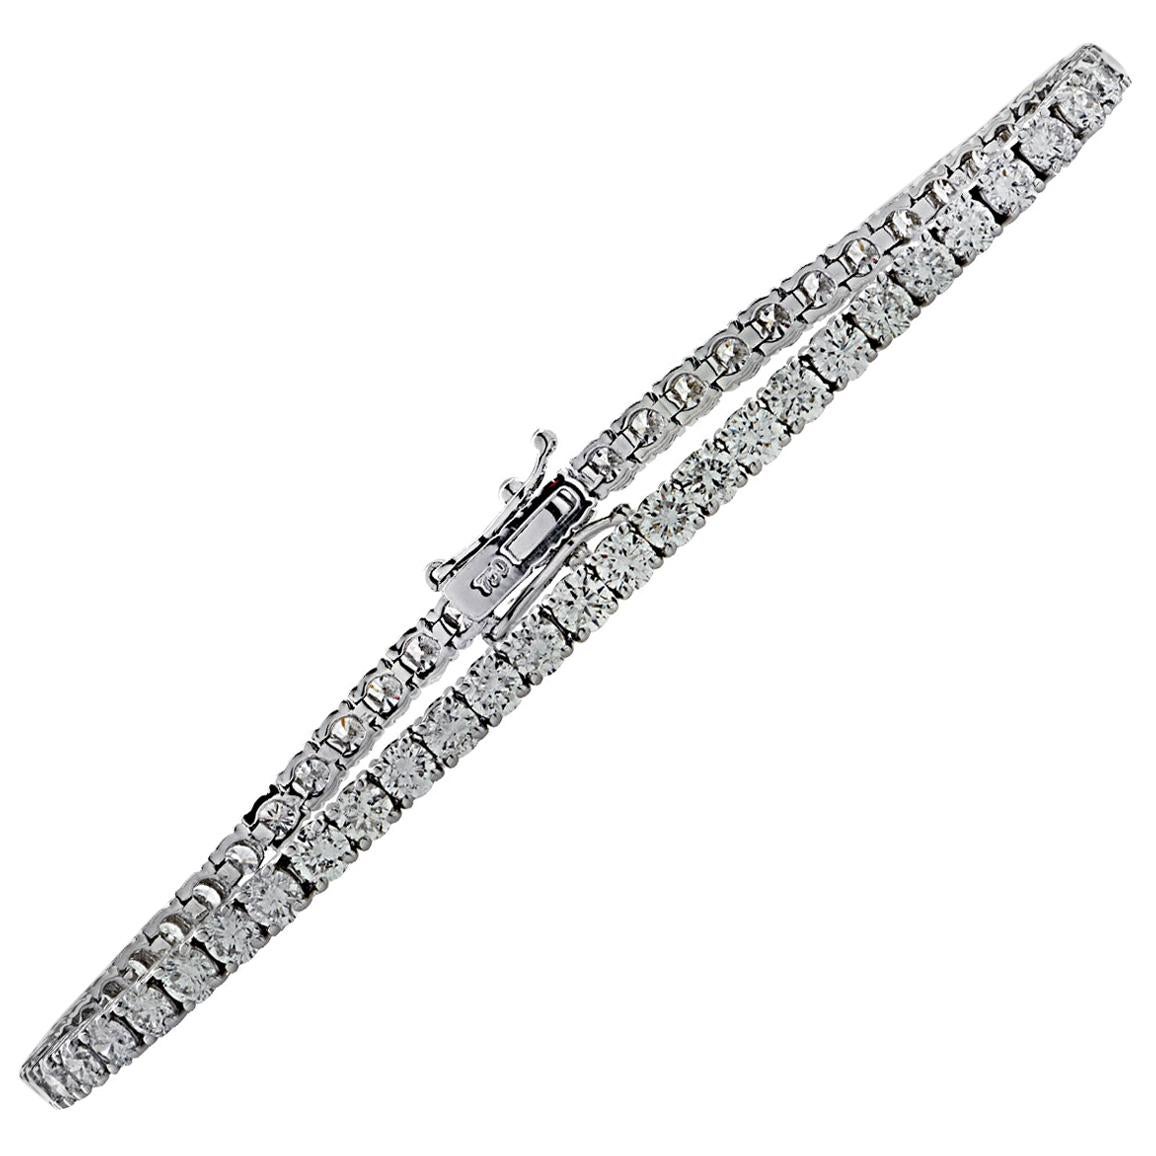 Vivid Diamonds 3.14 Carat Diamond Tennis Bracelet